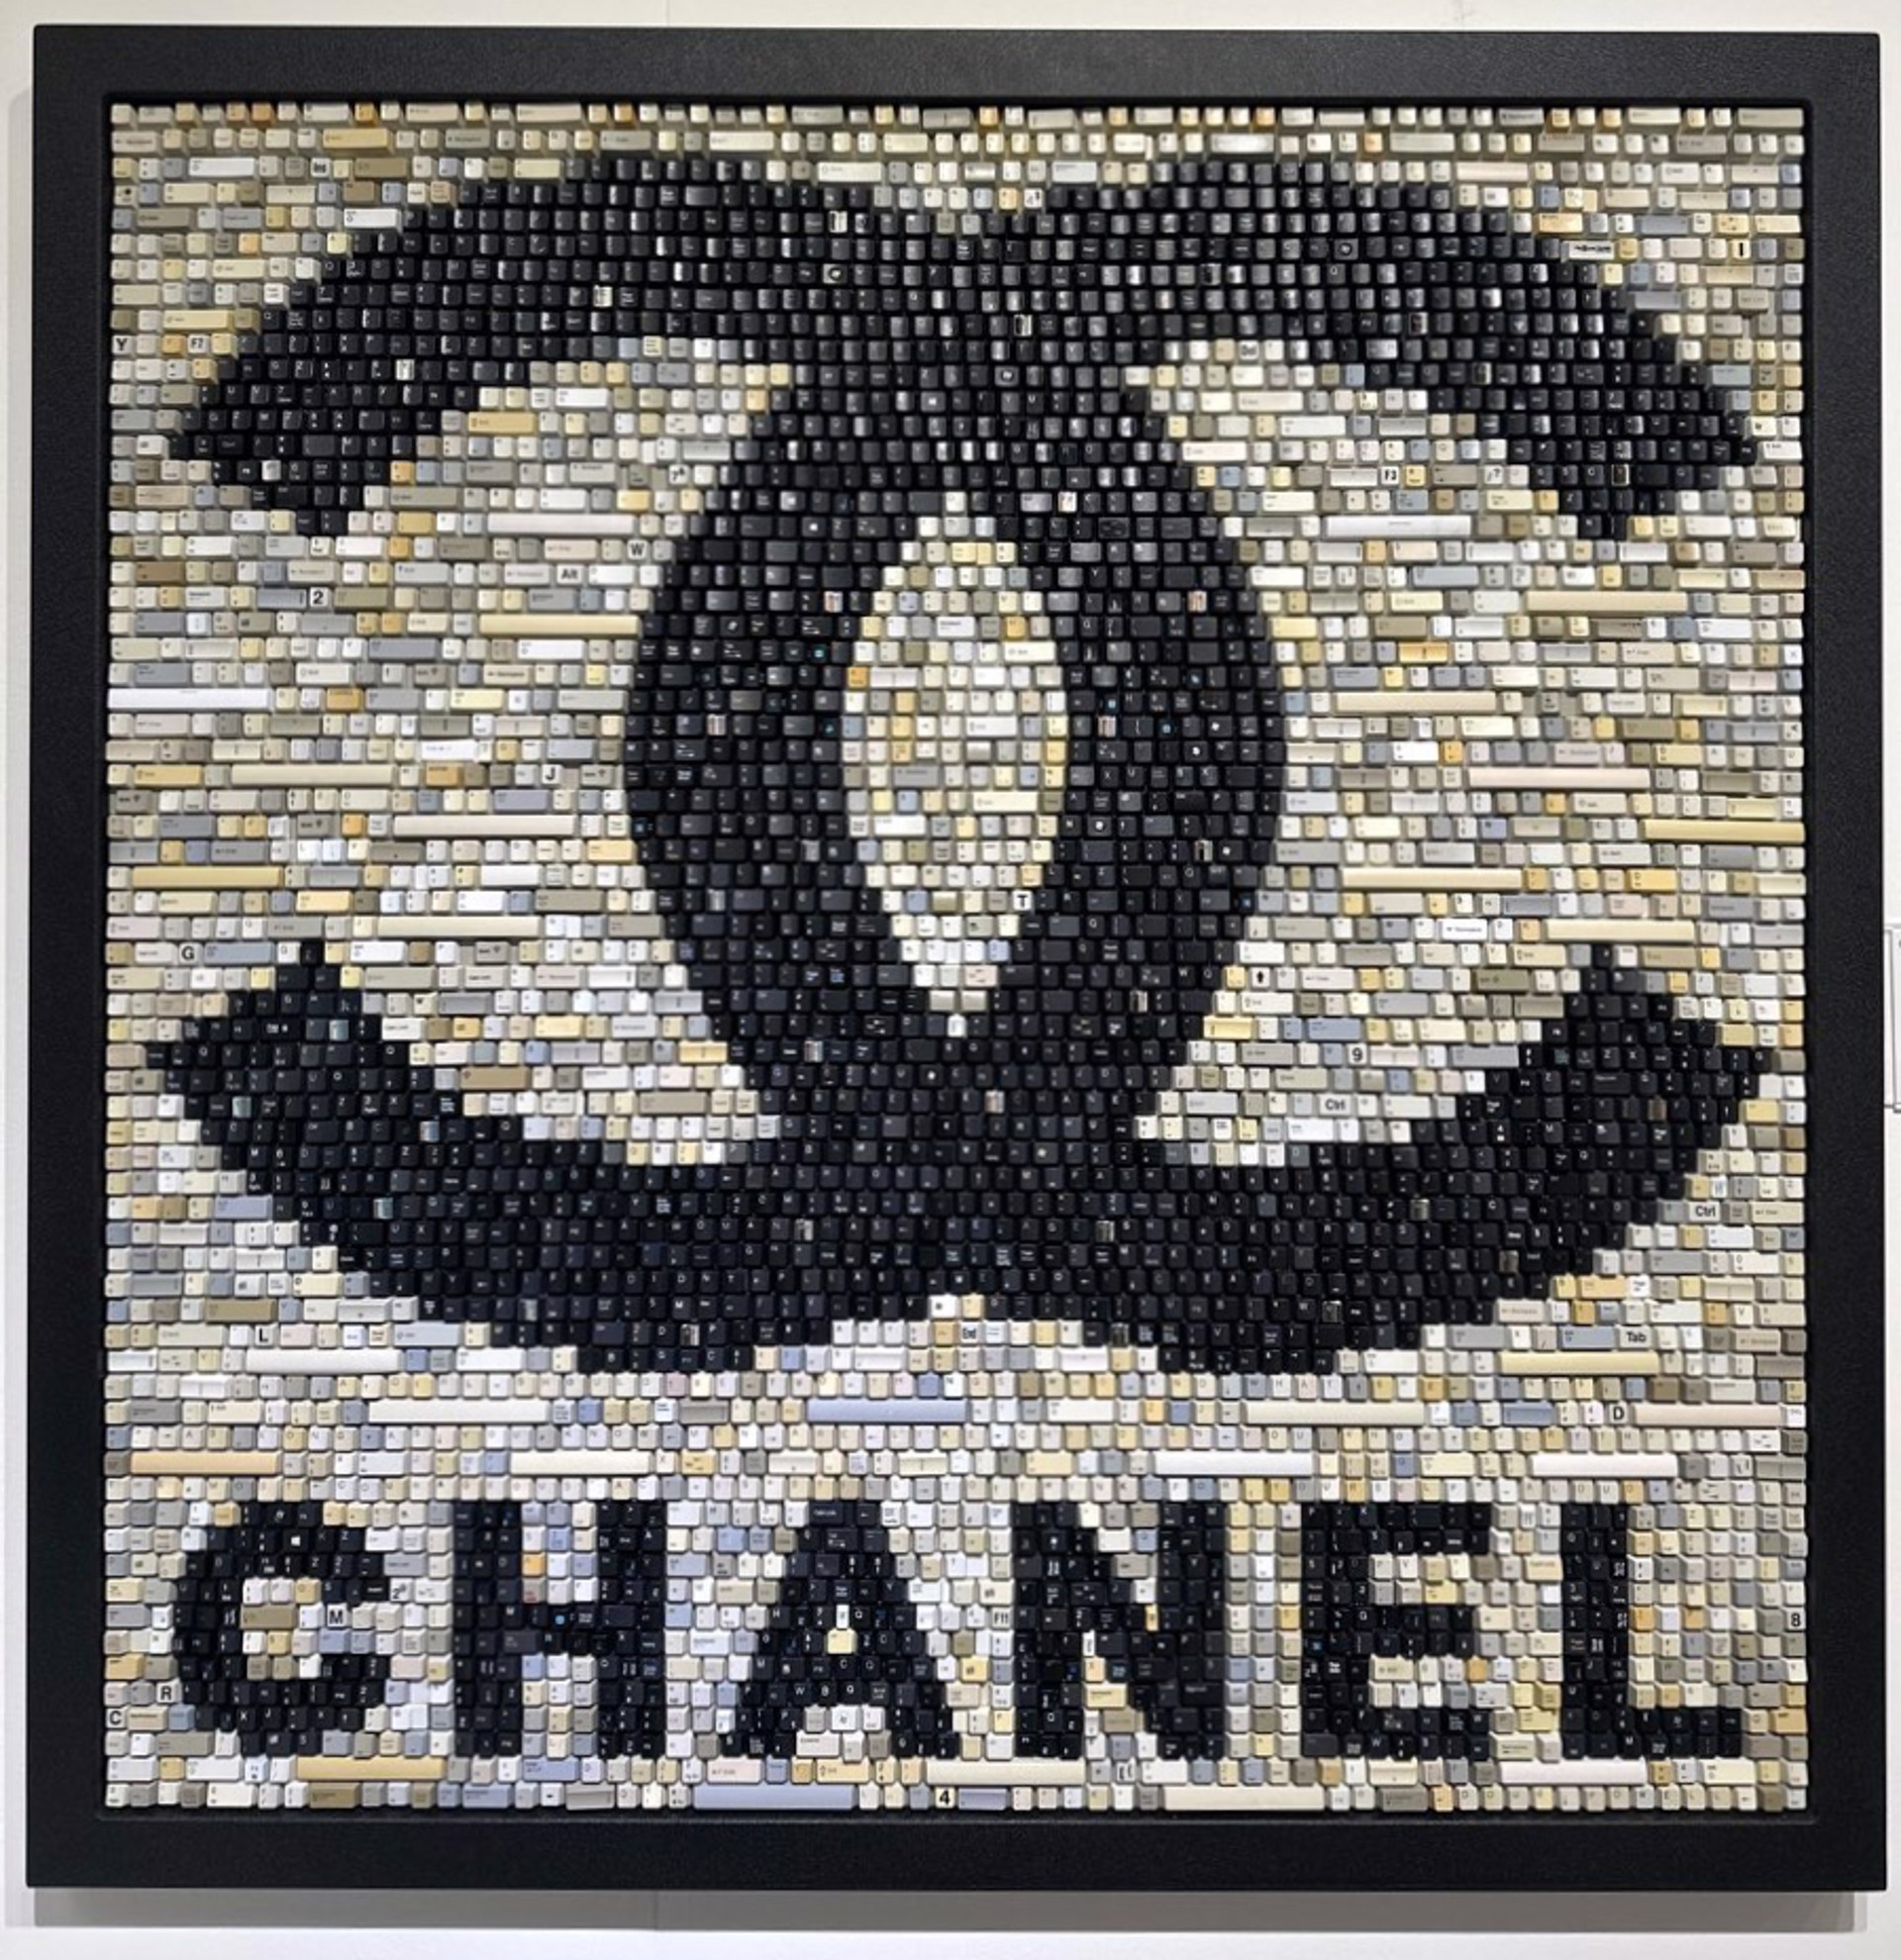 Chanel by Doug Powell